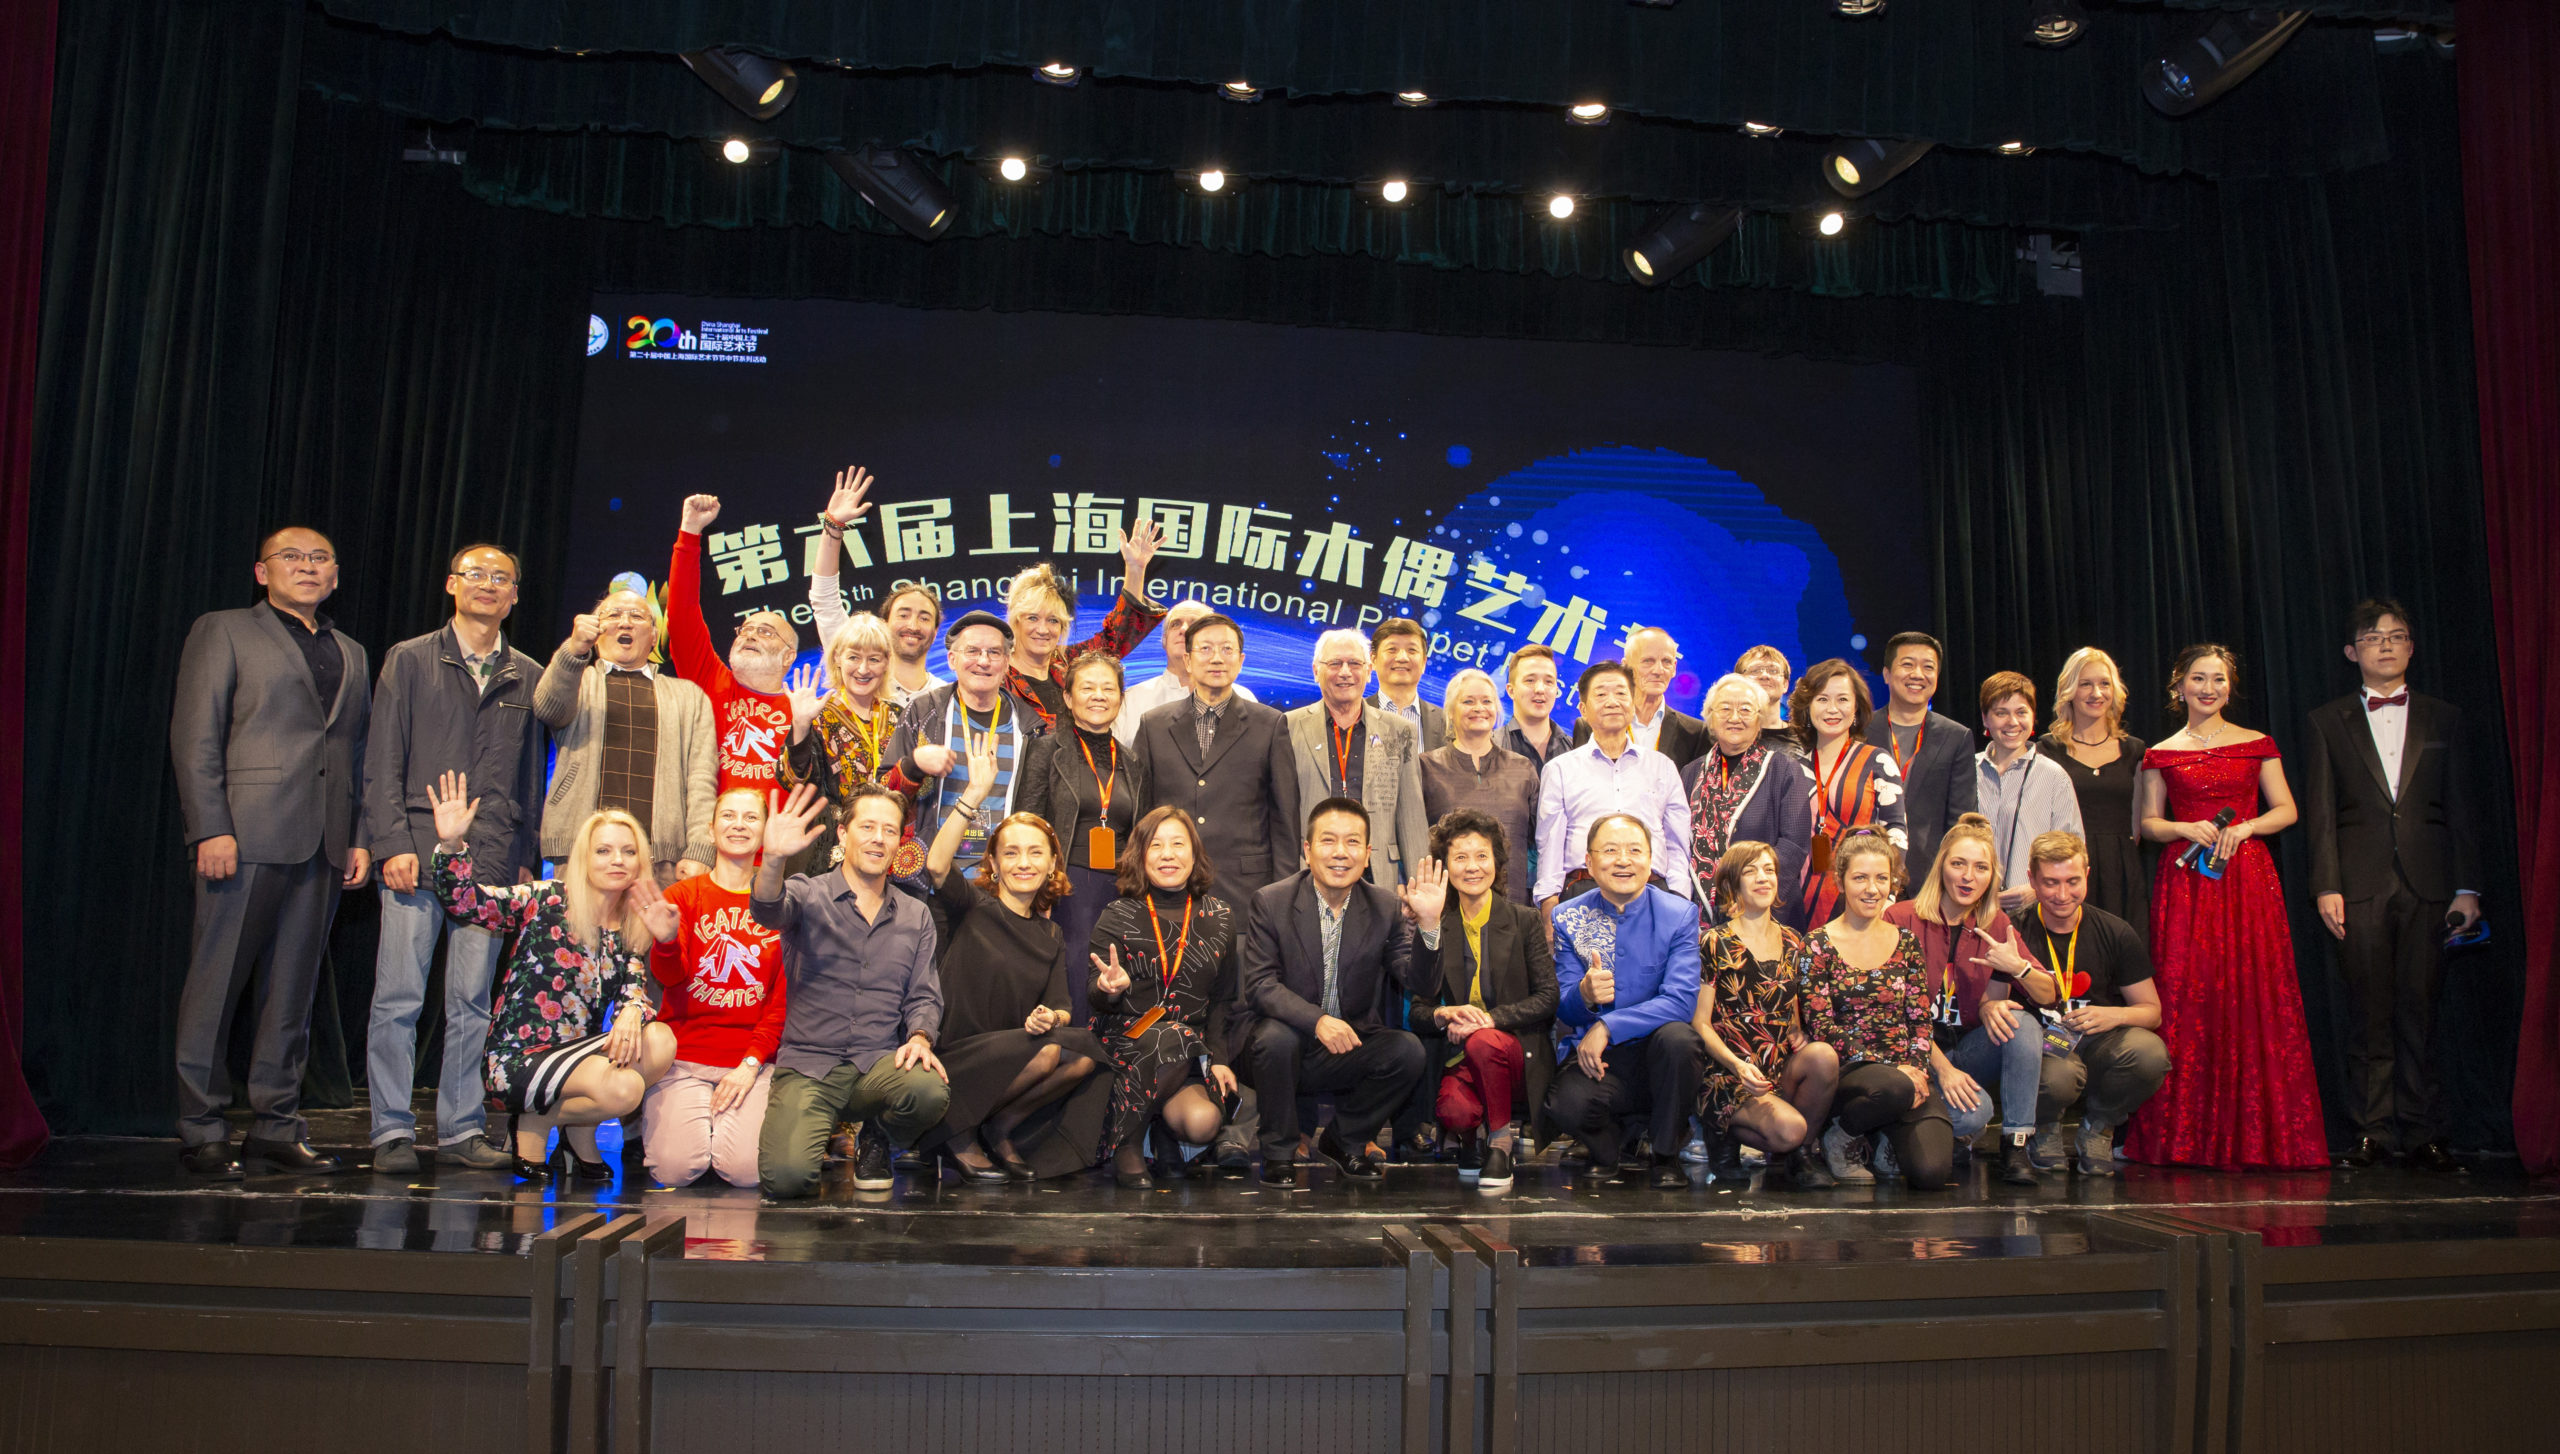 Shanghai puppetfestival 2018